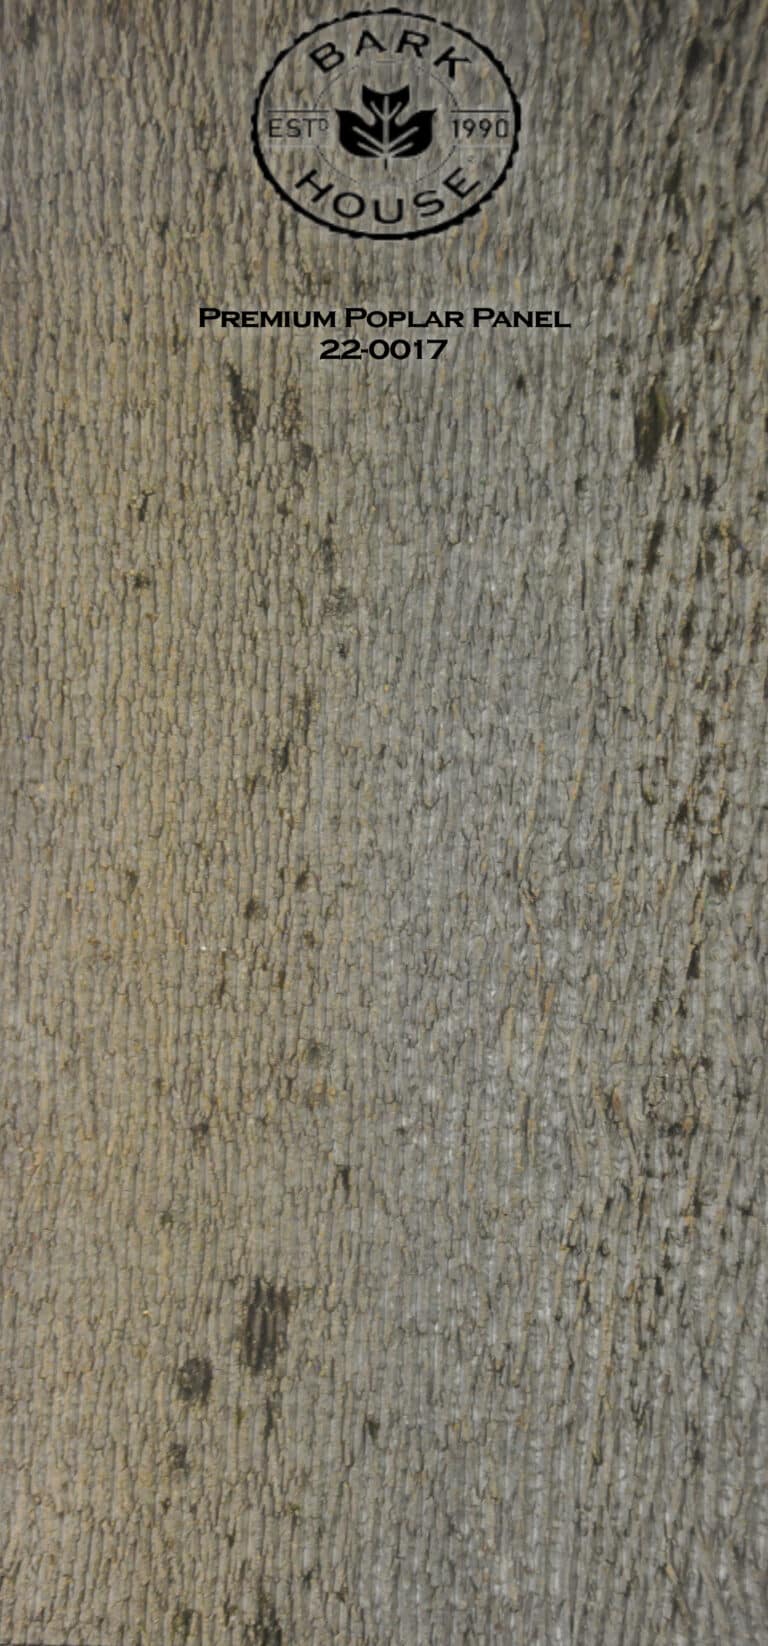 Bark House poplar bark panel SKU POPP-PRE-22-0017